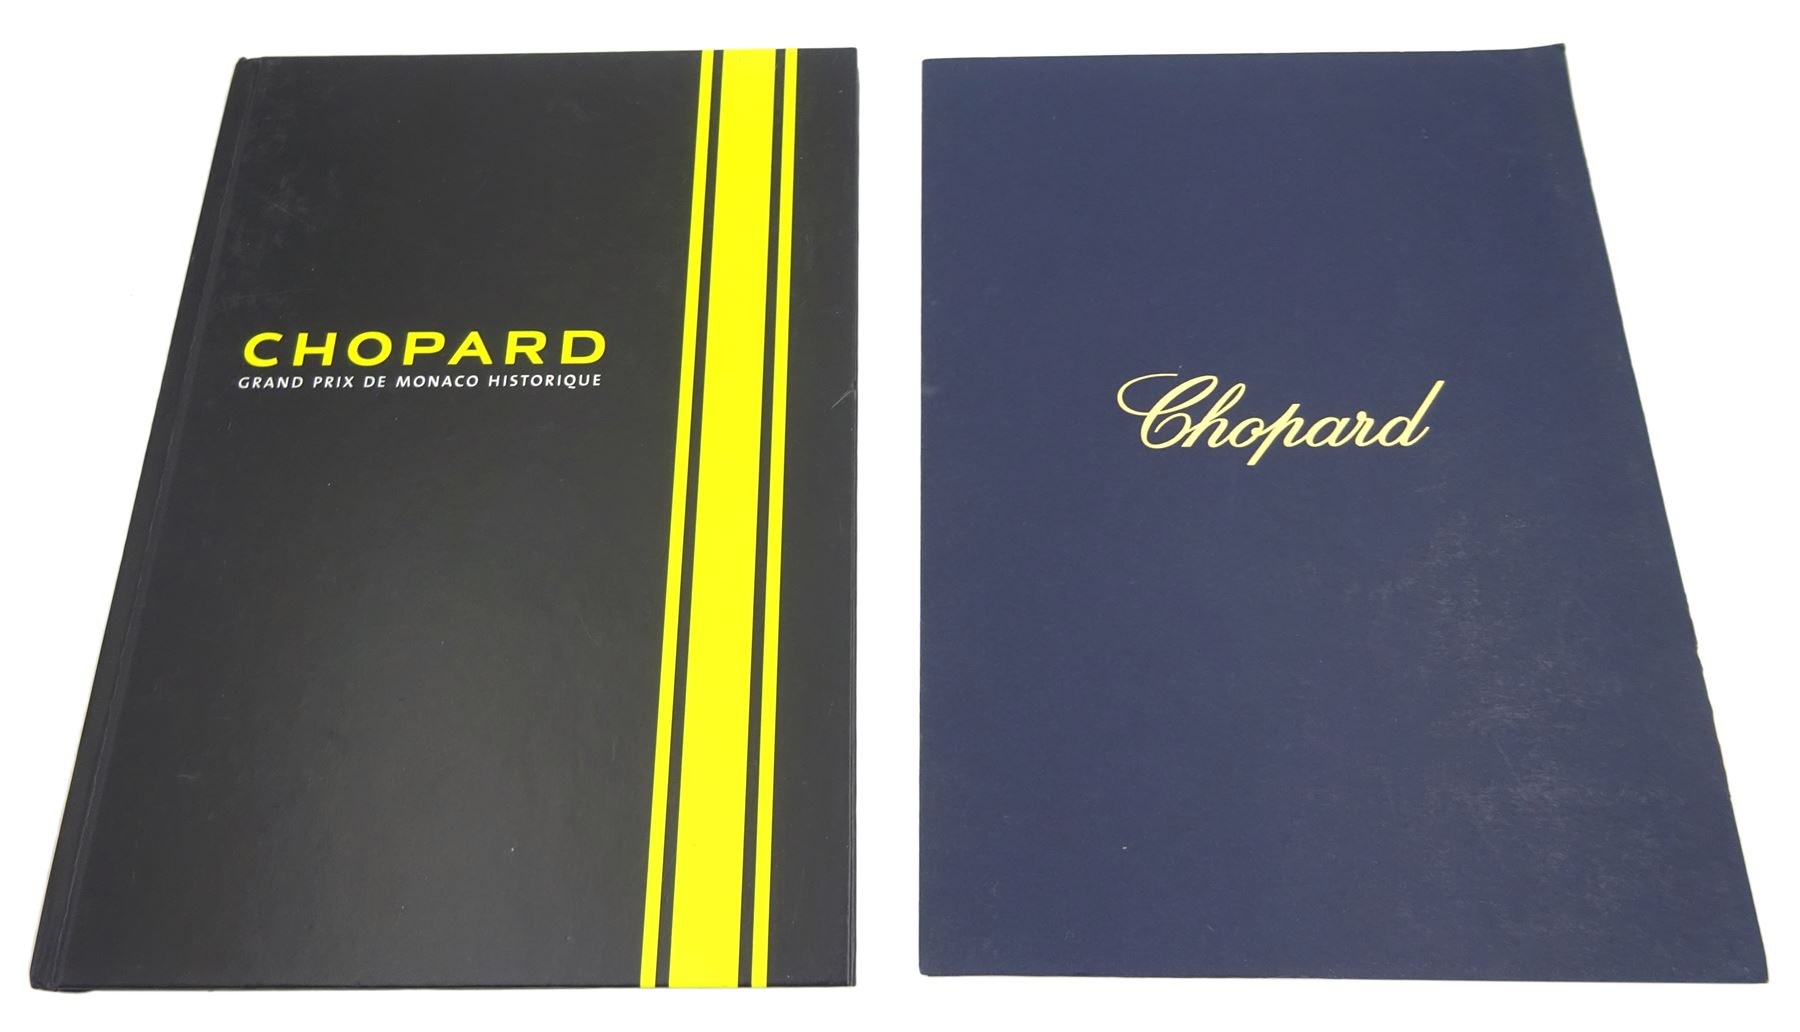 Chopard Grand Prix de Monaco Historique gentleman's stainless steel and titanium automatic chronogra - Image 6 of 7